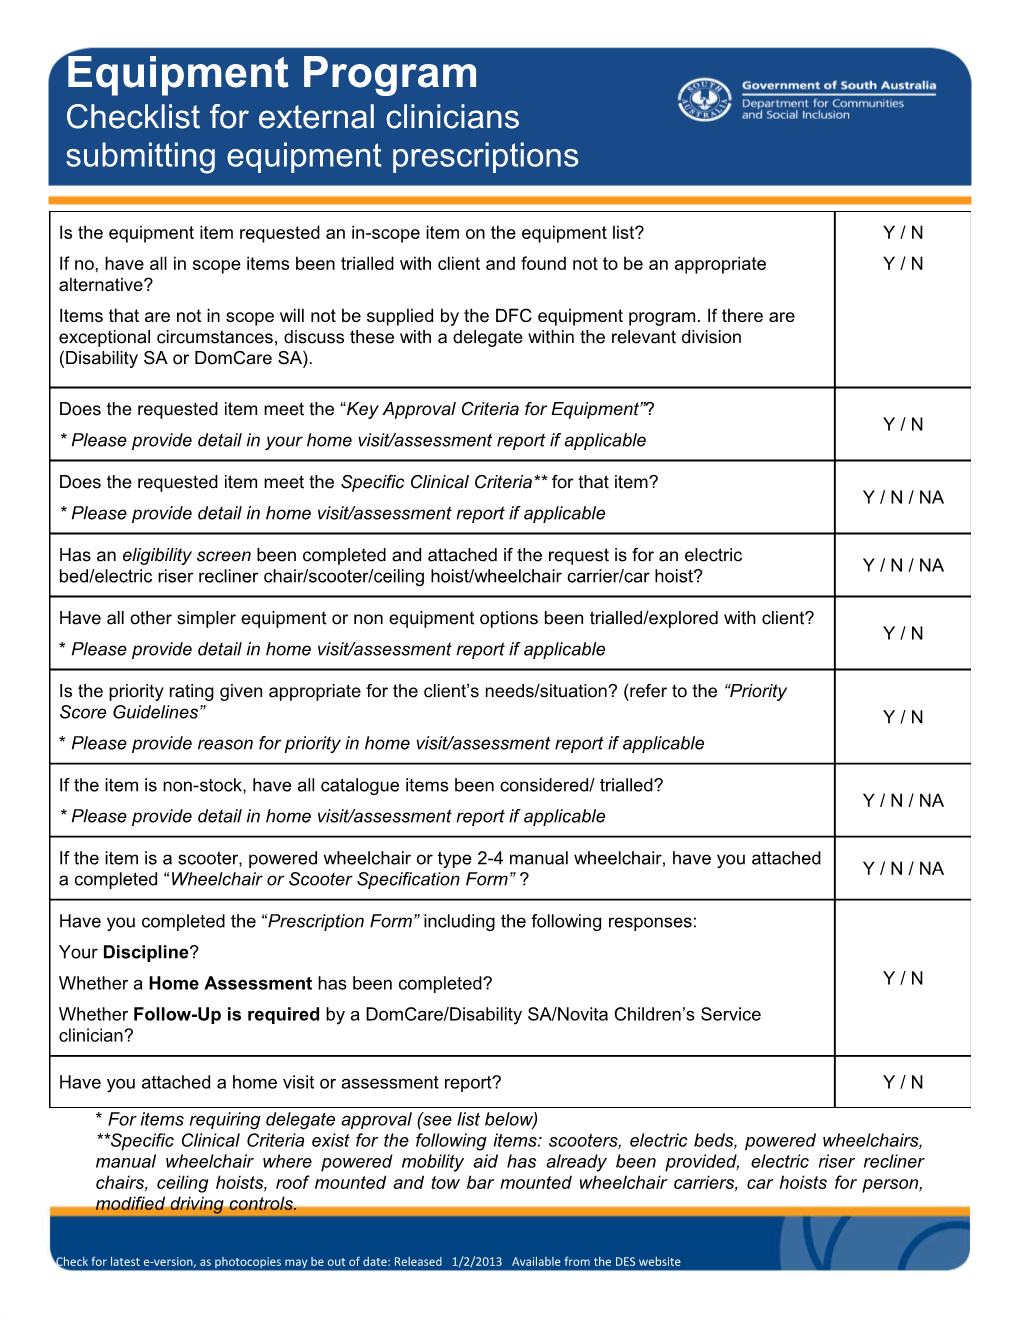 Checklist for External Clinicians Submitting Equipment Prescriptions